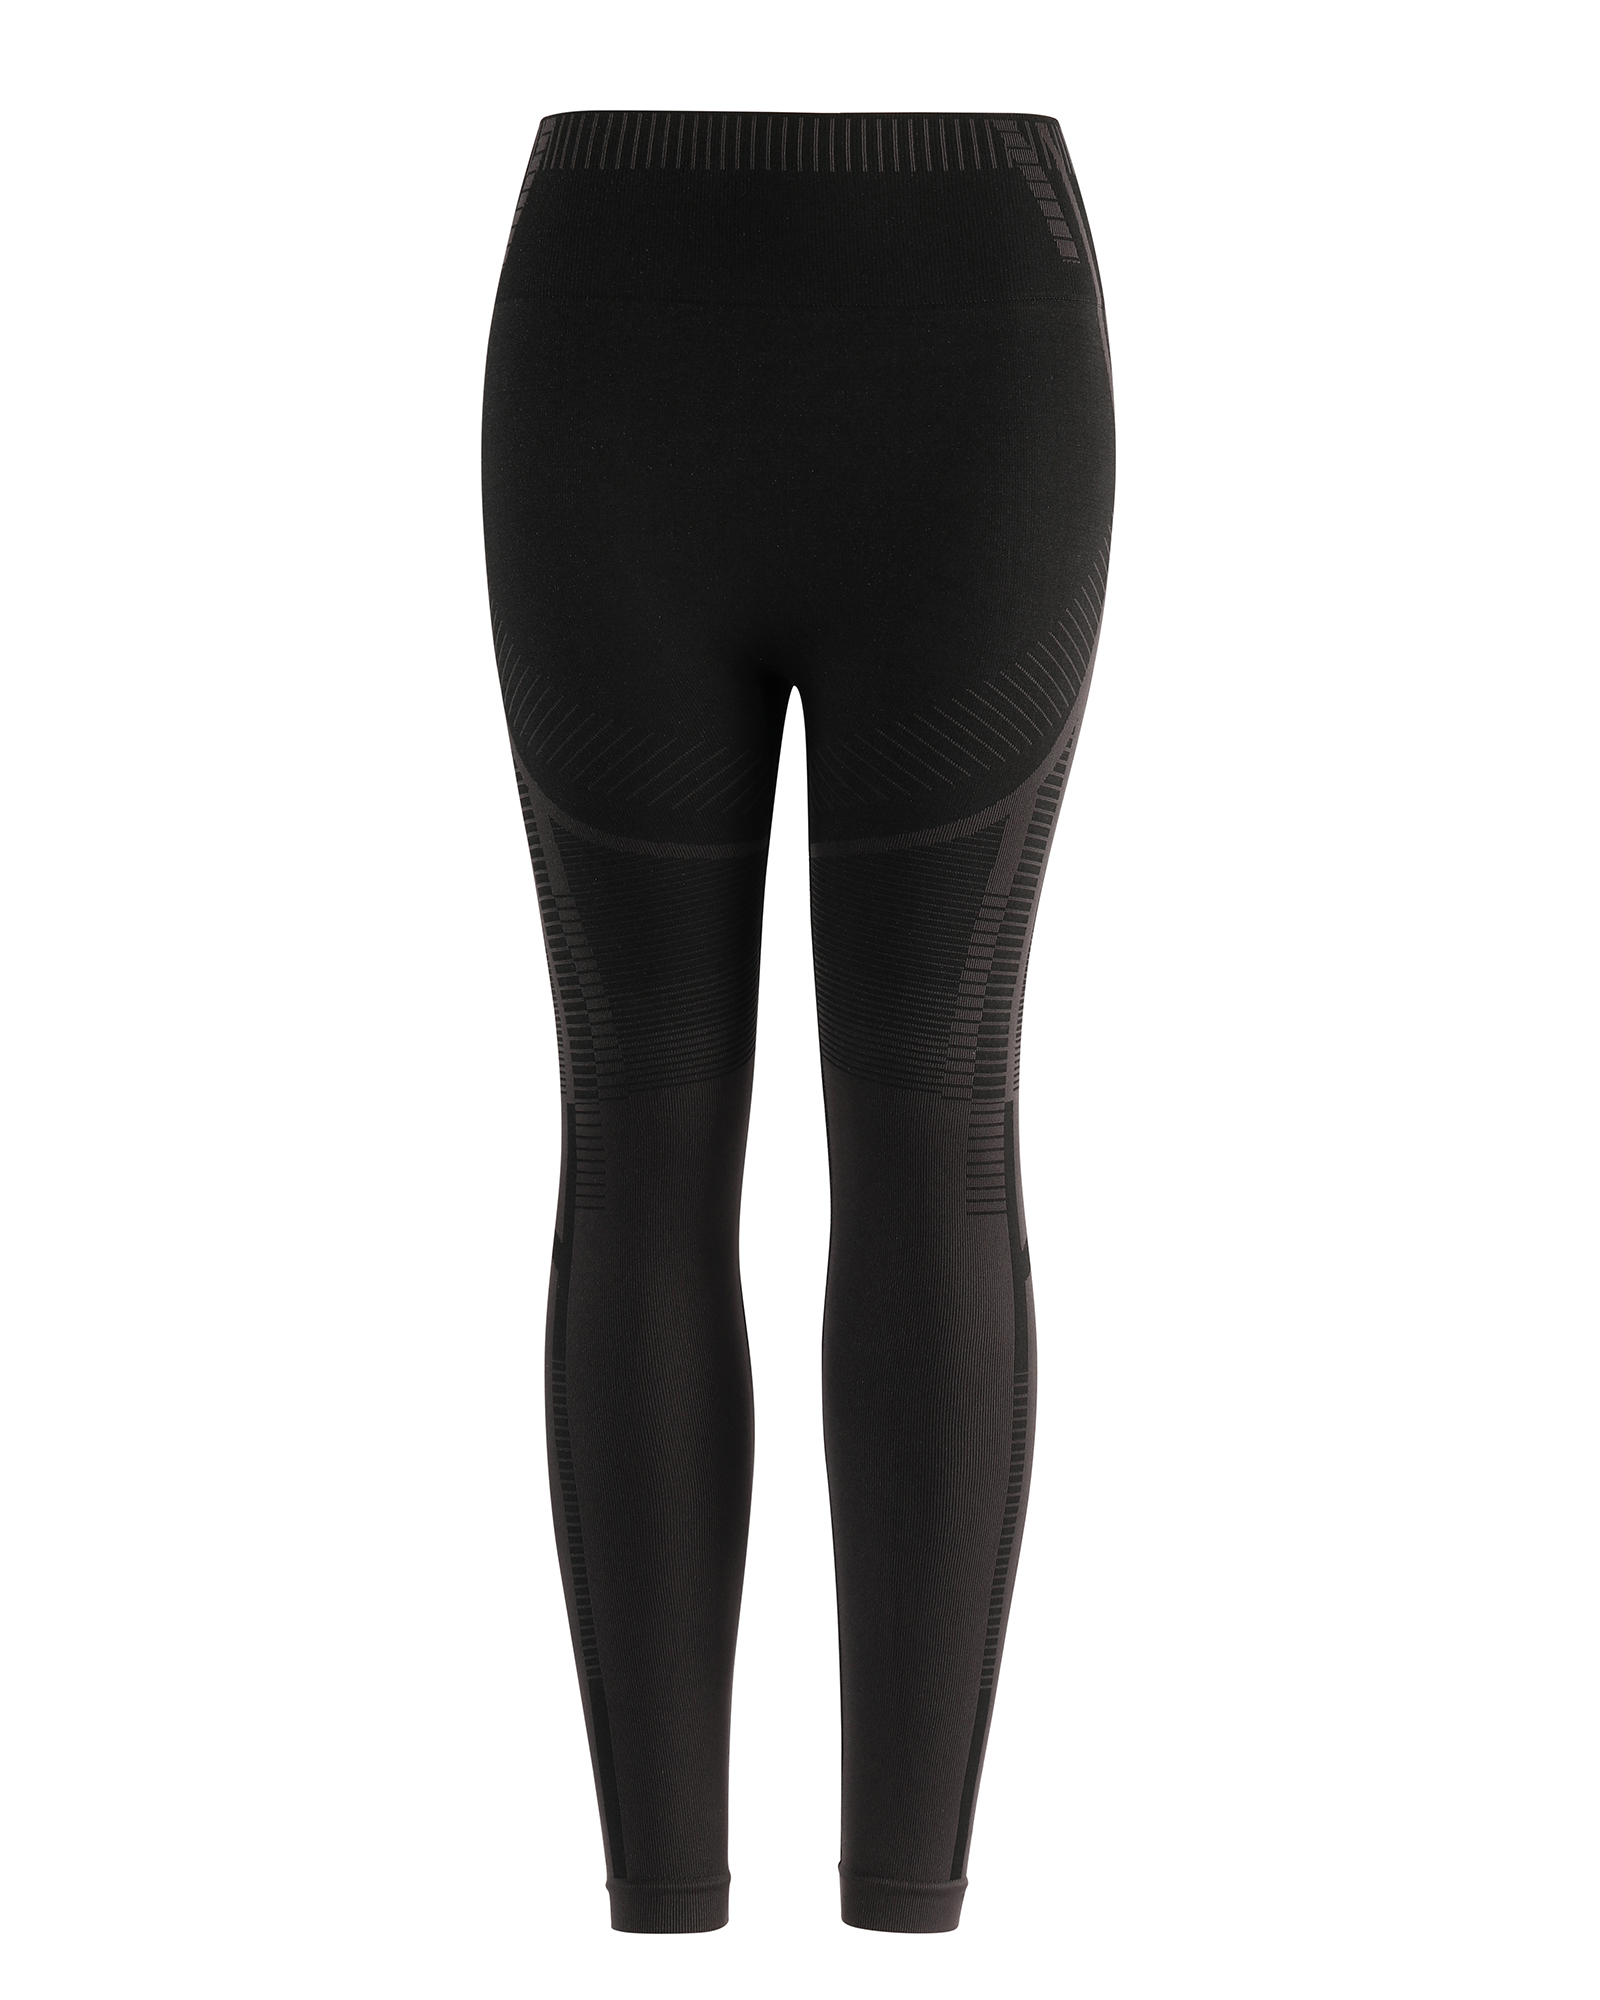 TEK GEAR SHAPEWEAR Womens M Black Magic Activewear High Waisted Yoga Pants  NWT £10.45 - PicClick UK